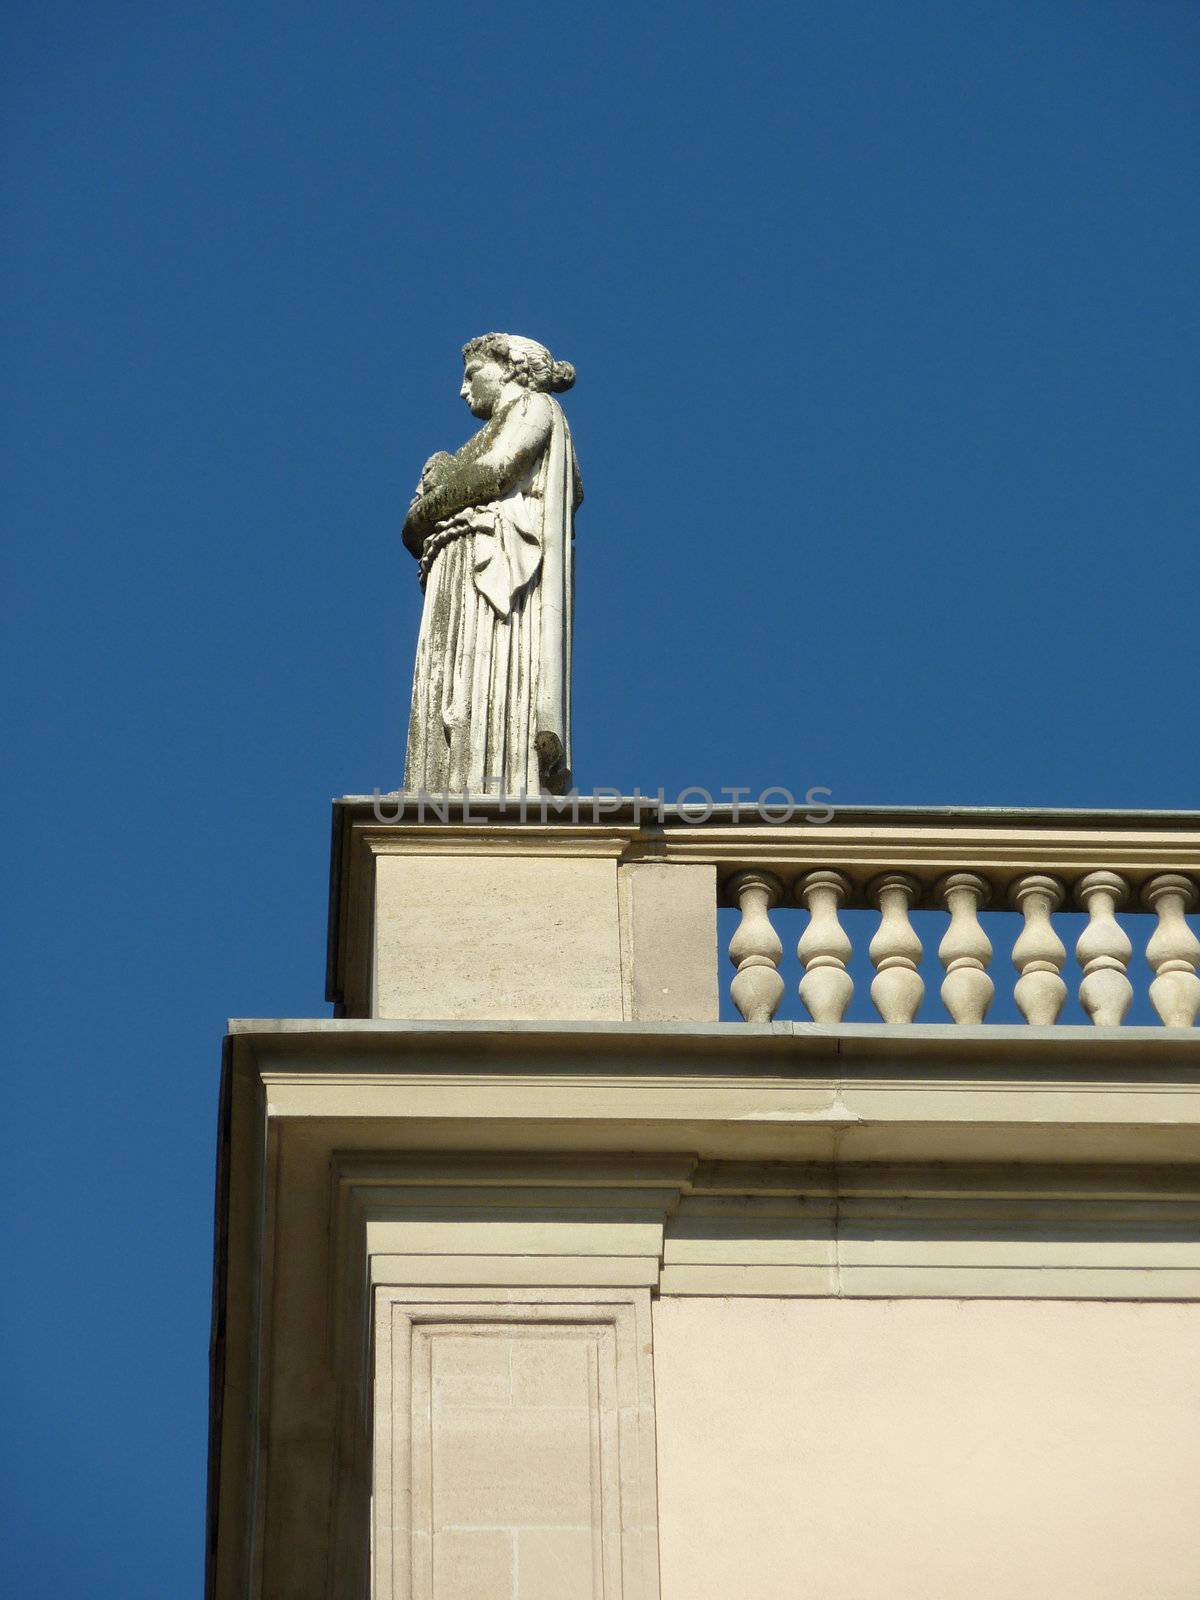 White statue on a balcony by Elenaphotos21